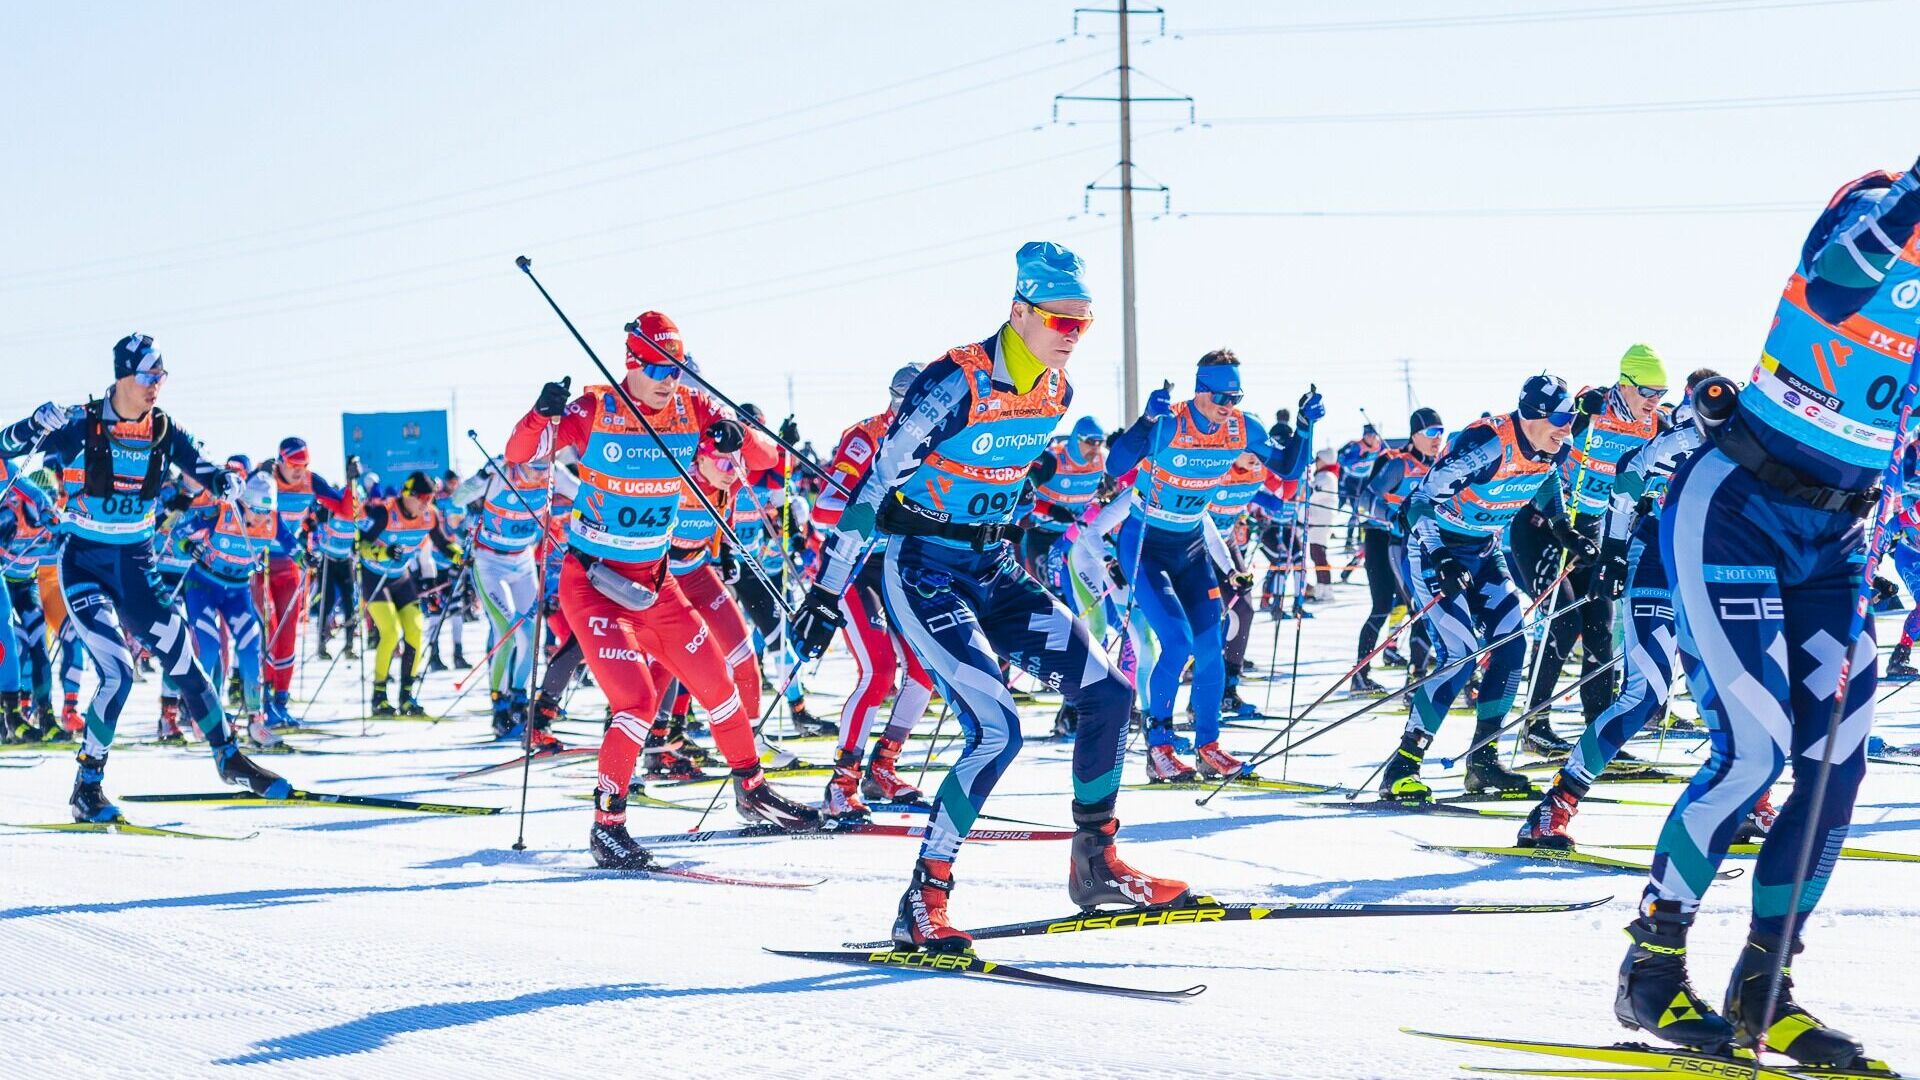 Х Югорский лыжный марафон станет международным